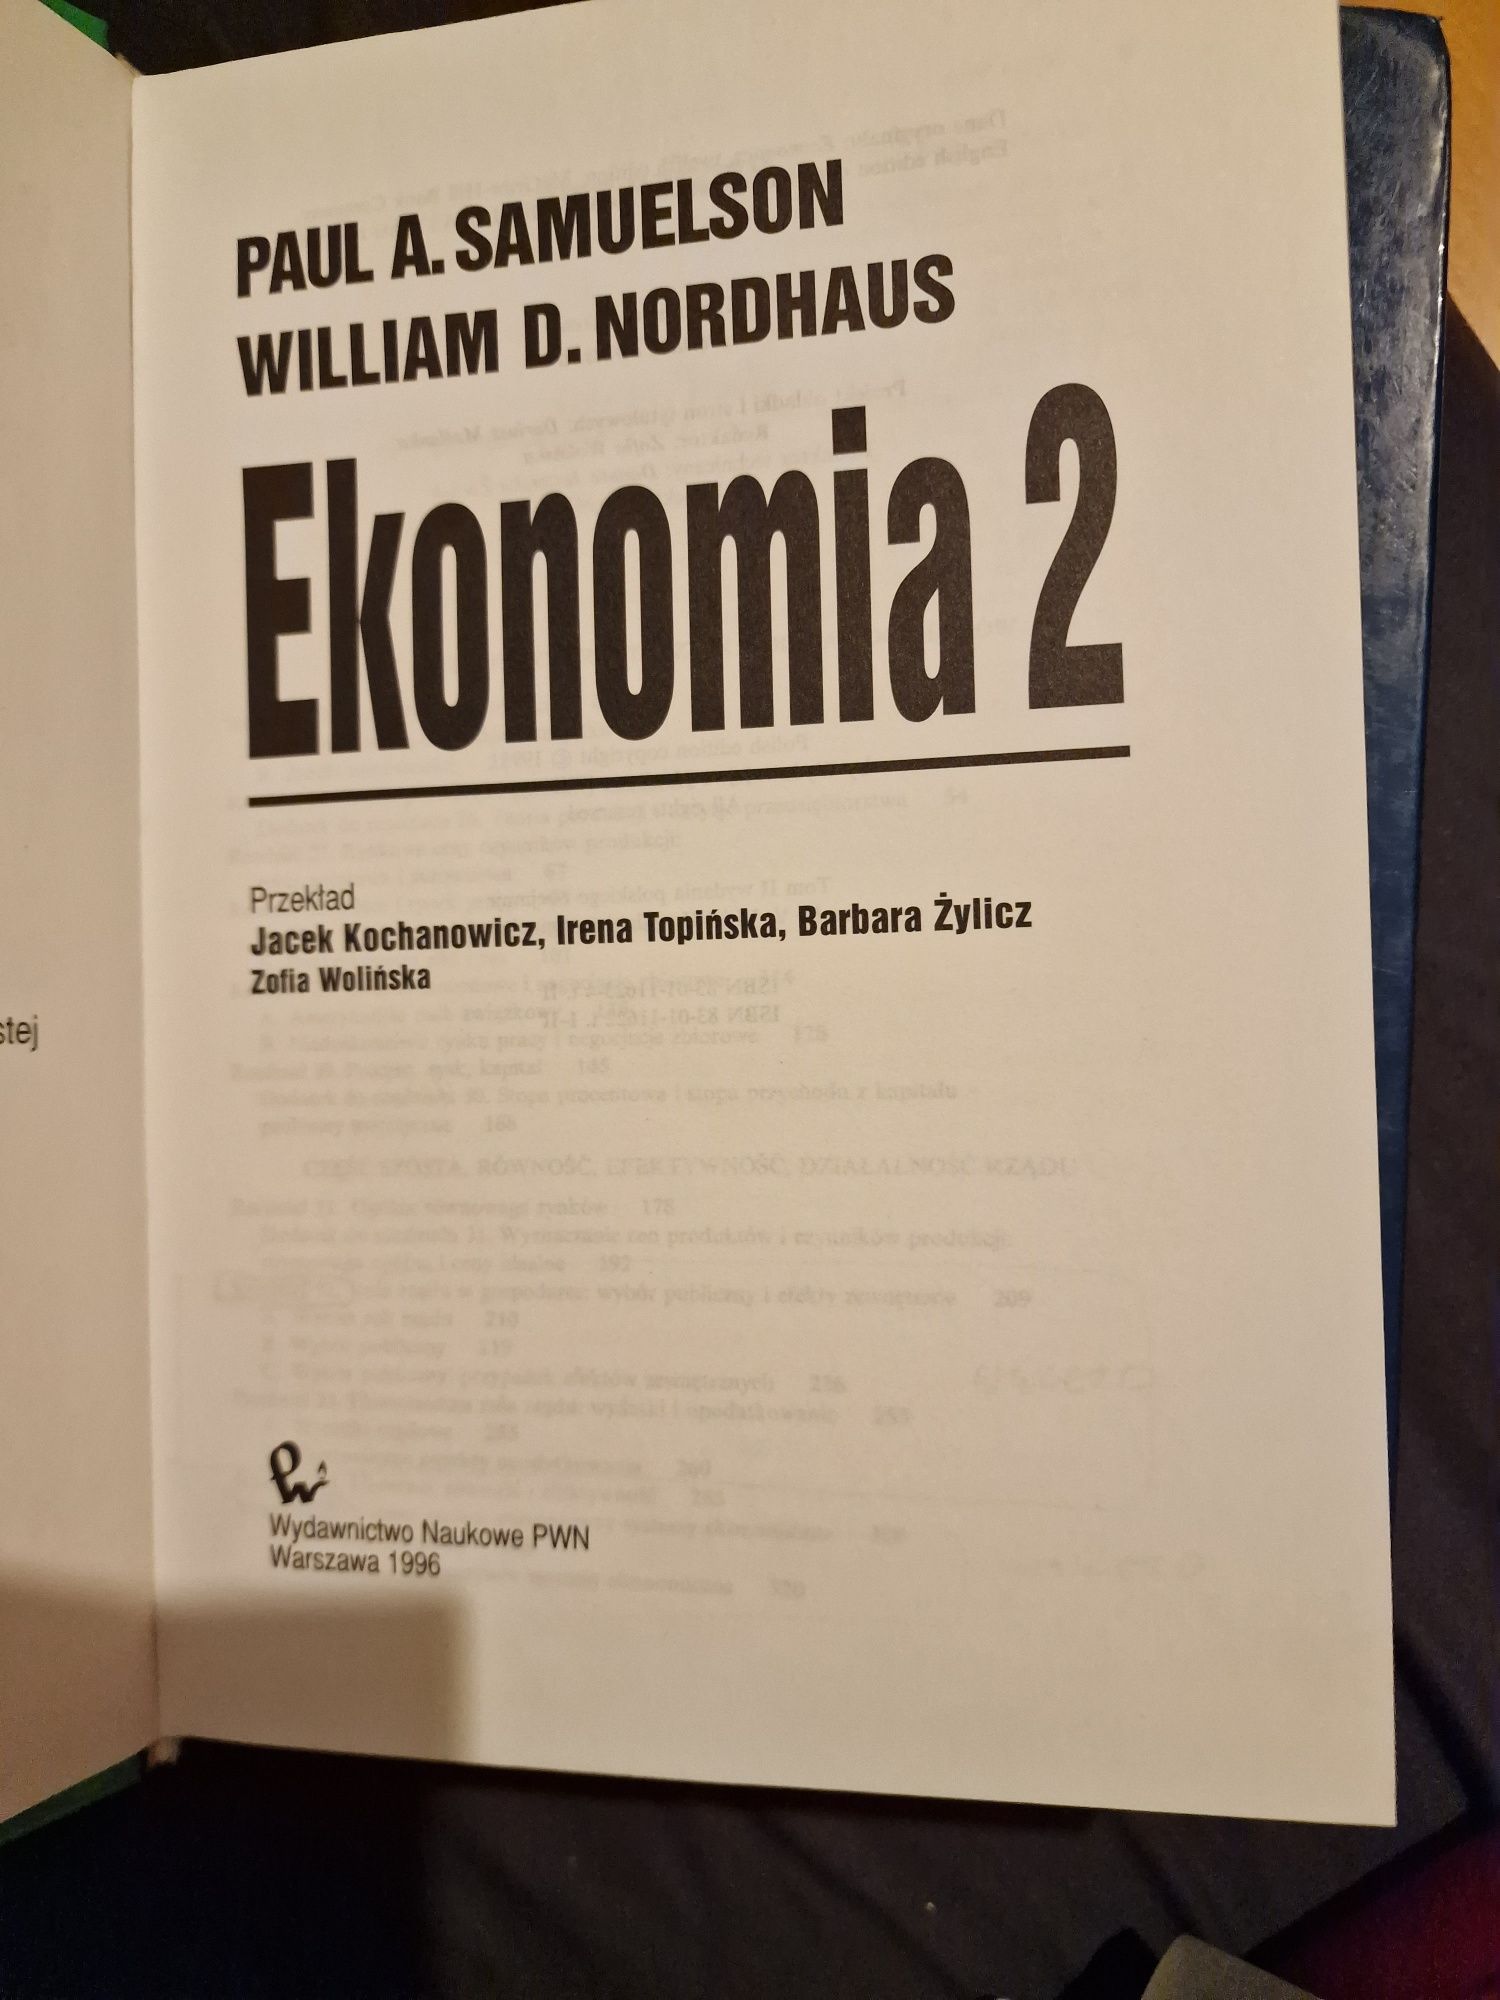 Ekonomia t1 i t2 Samuelson & Nordhaus, Kierowanie stoner